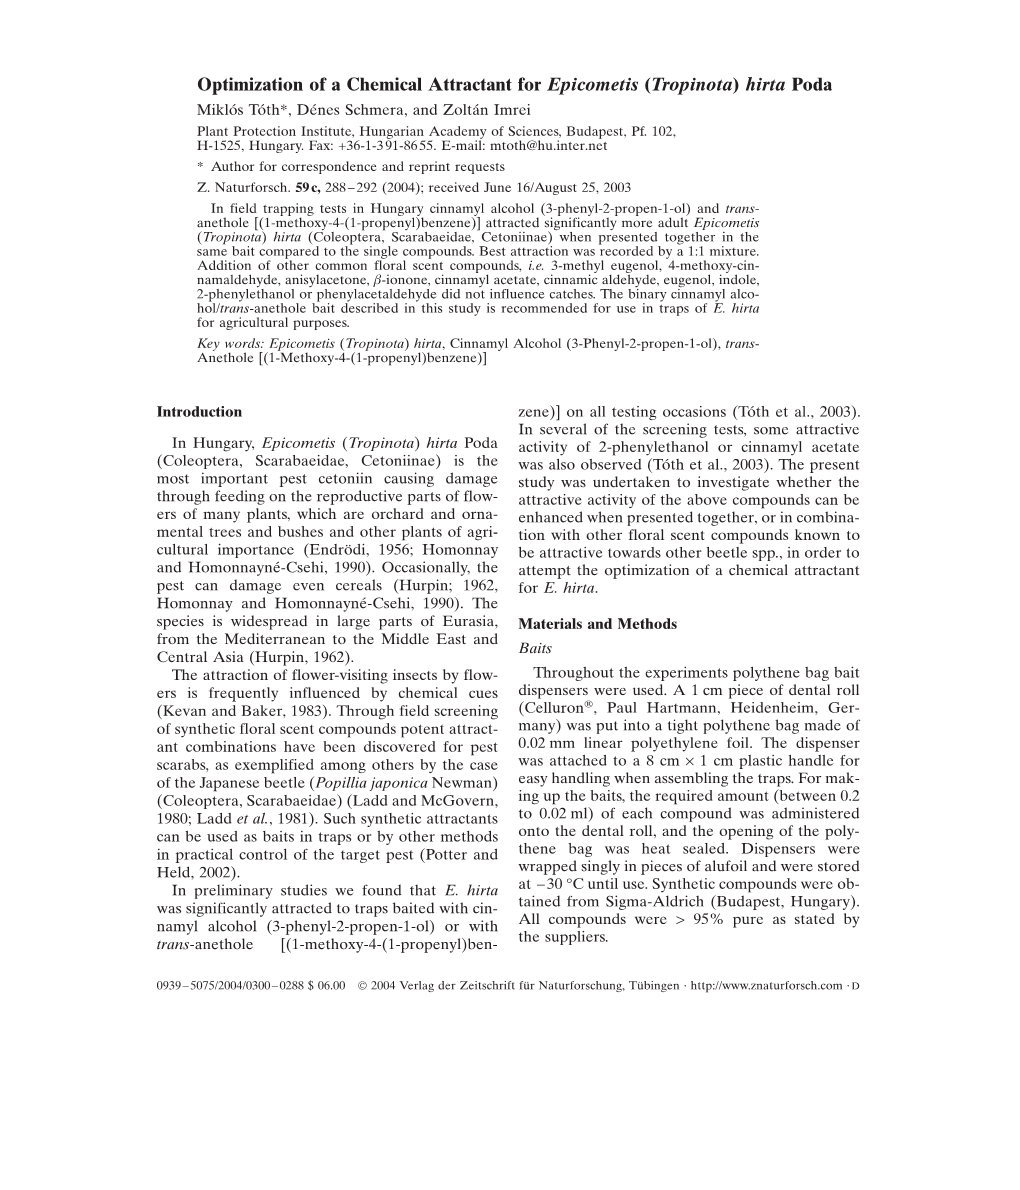 Optimization of a Chemical Attractant for Epicometis (Tropinota) Hirta Poda